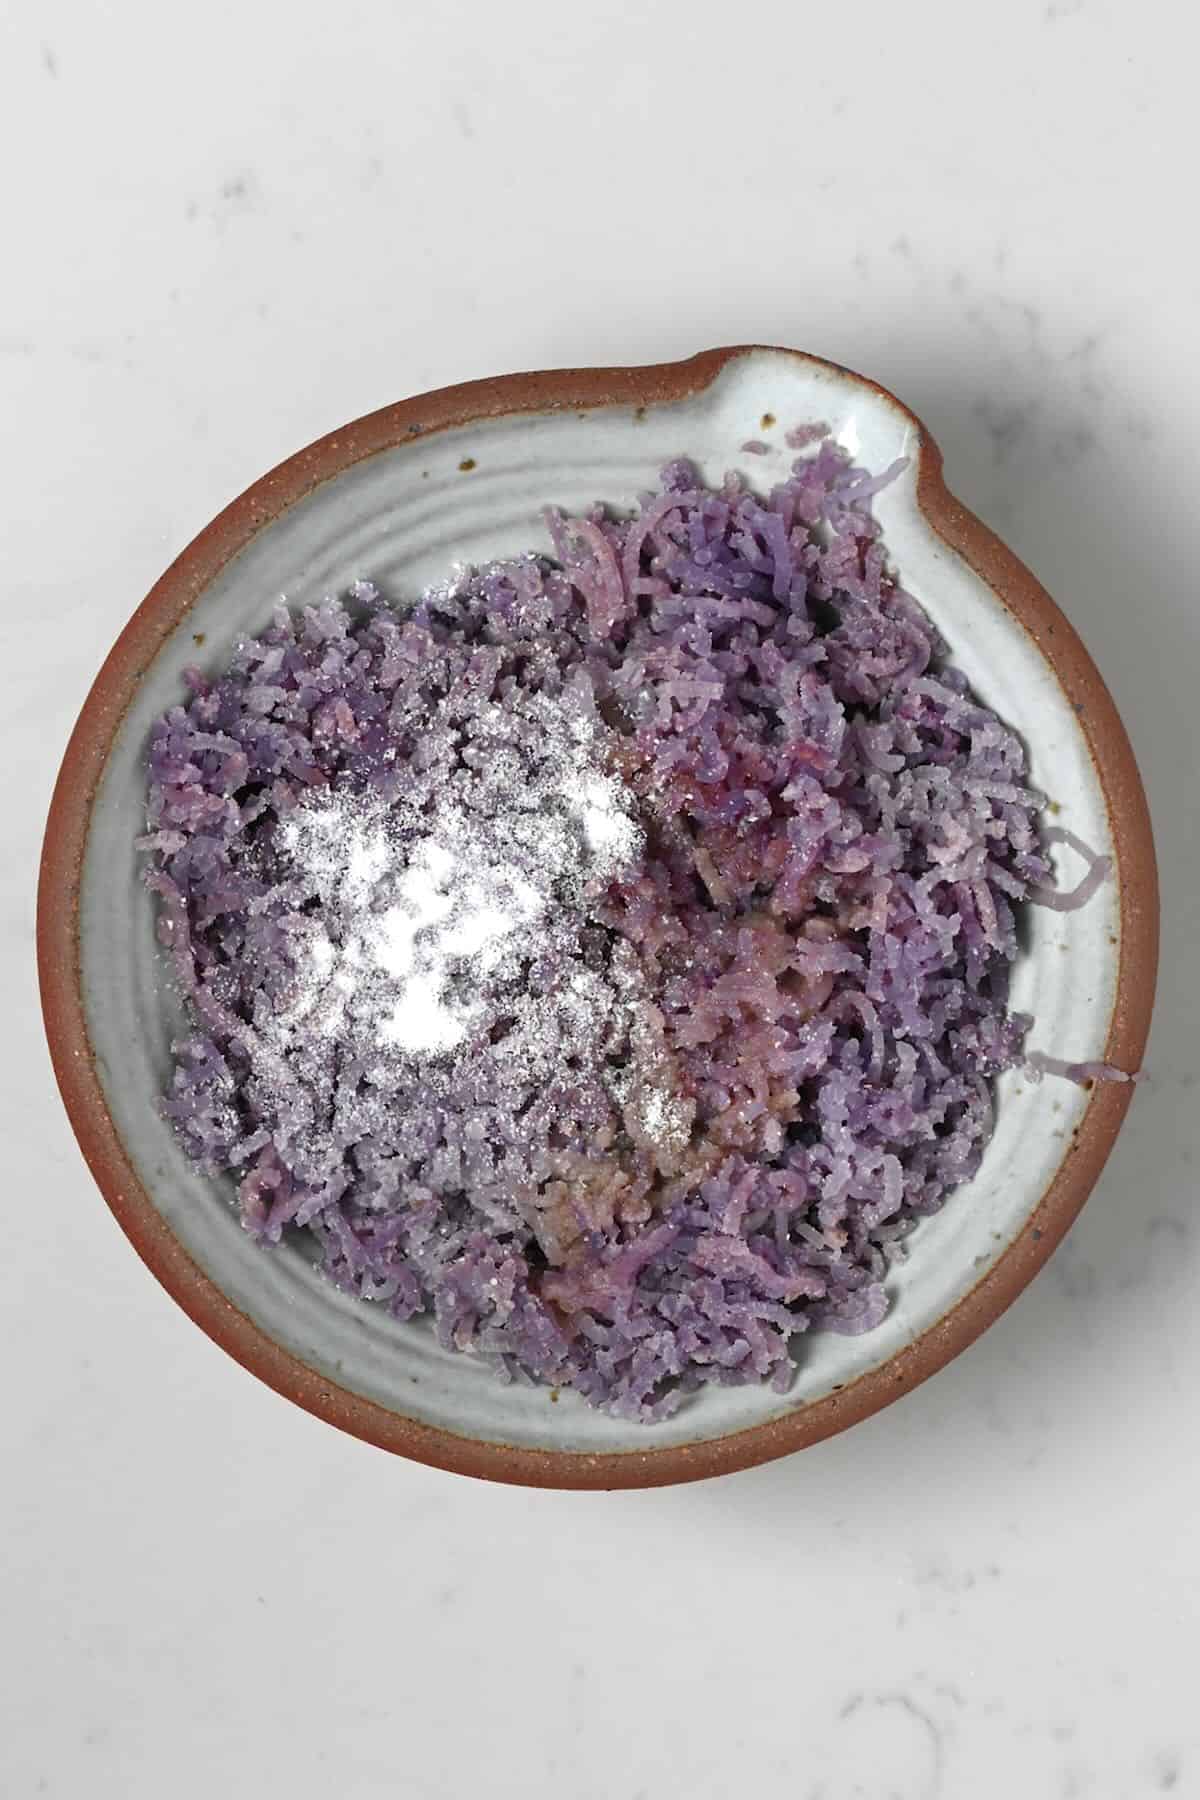 Adding seasoning to mashed purple potatoes